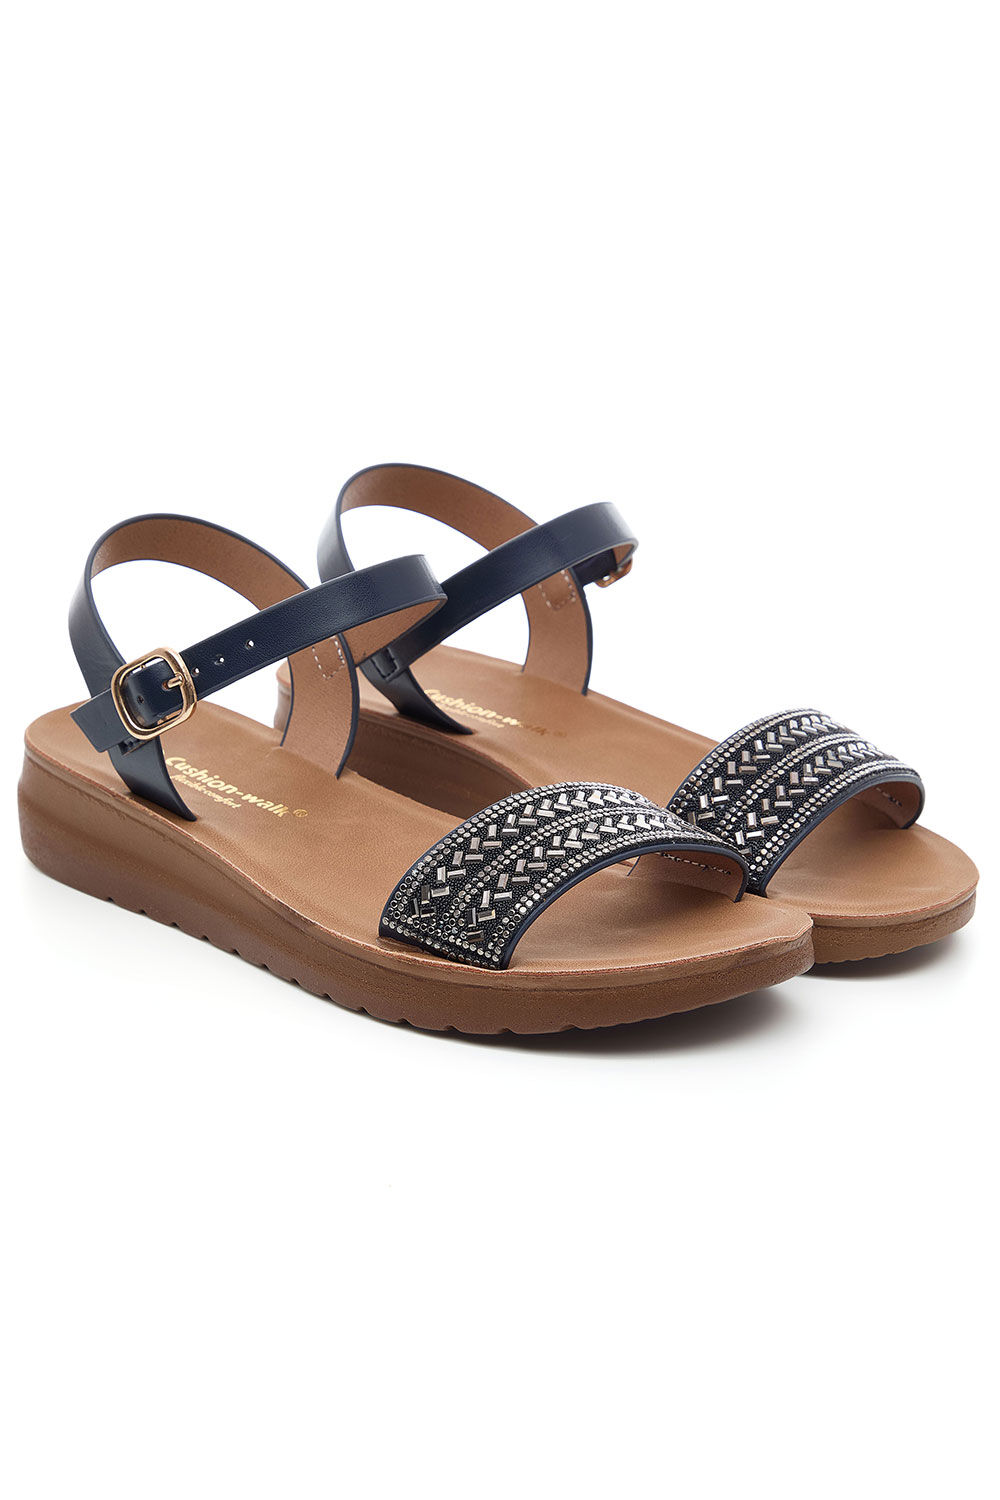 Bonmarche Navy Diamante Strap Flat Sandals With Ankle Buckle Detail, Size: 4 - Summer Dresses